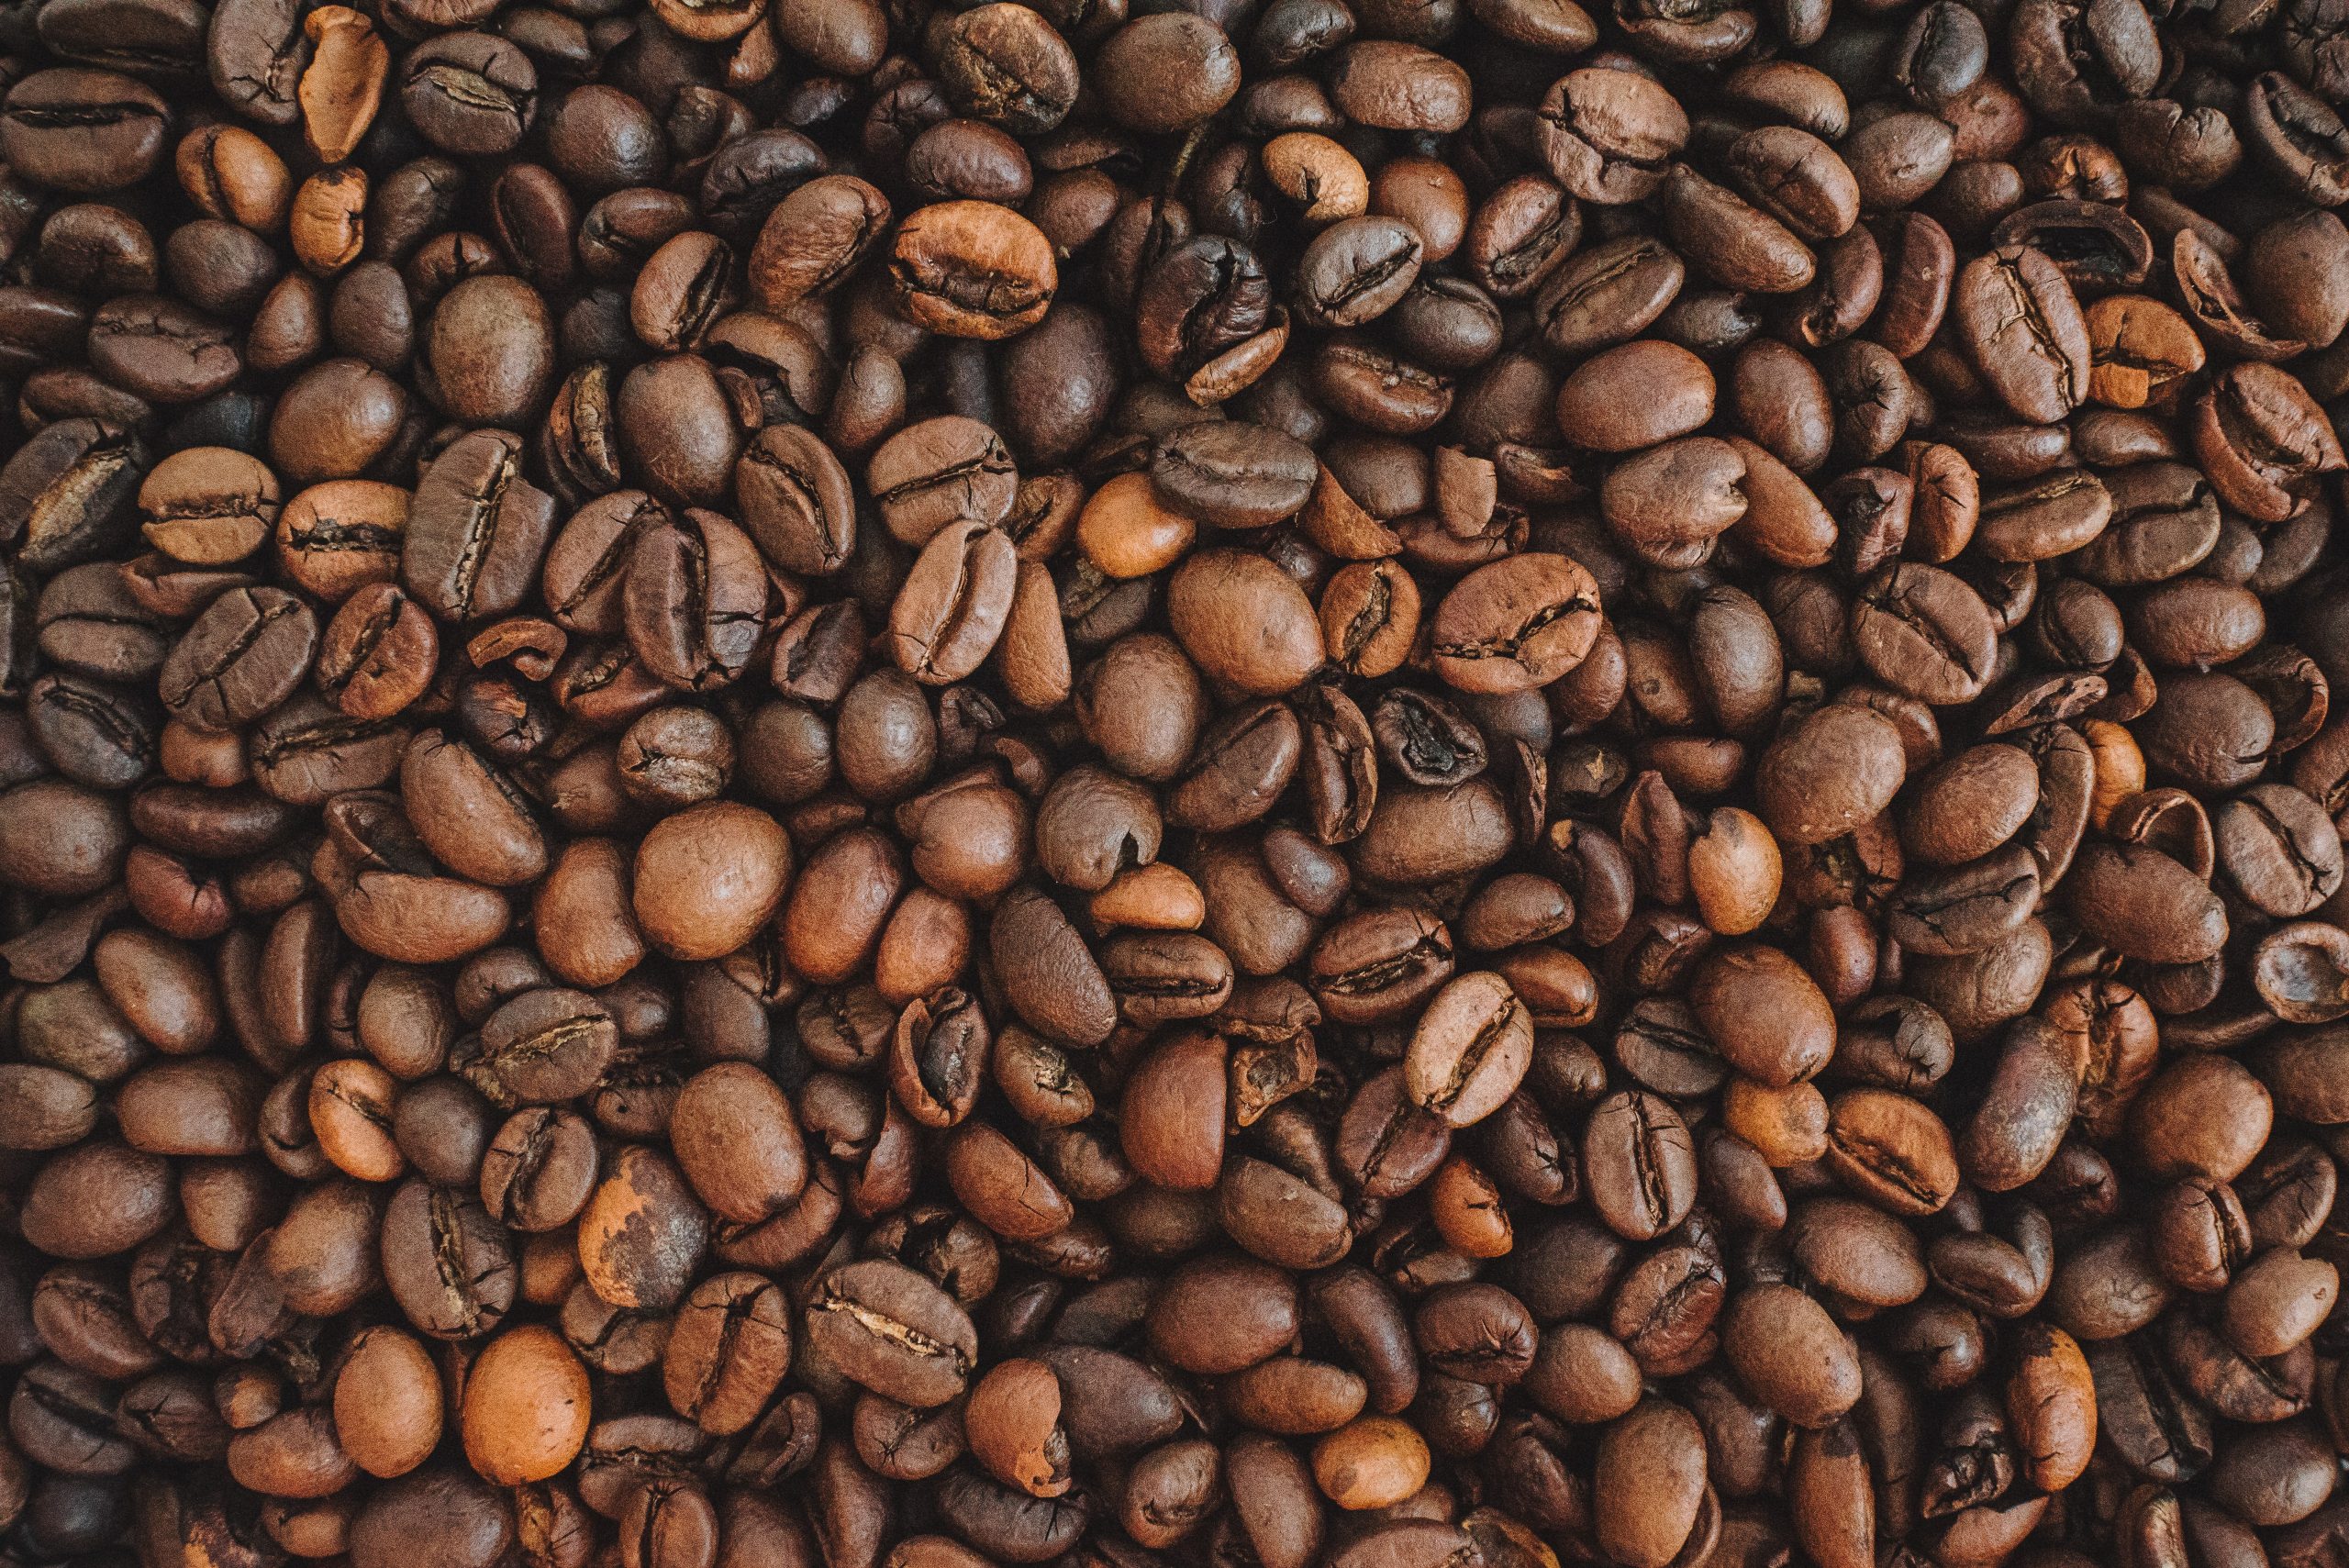 exporting coffee from Uganda